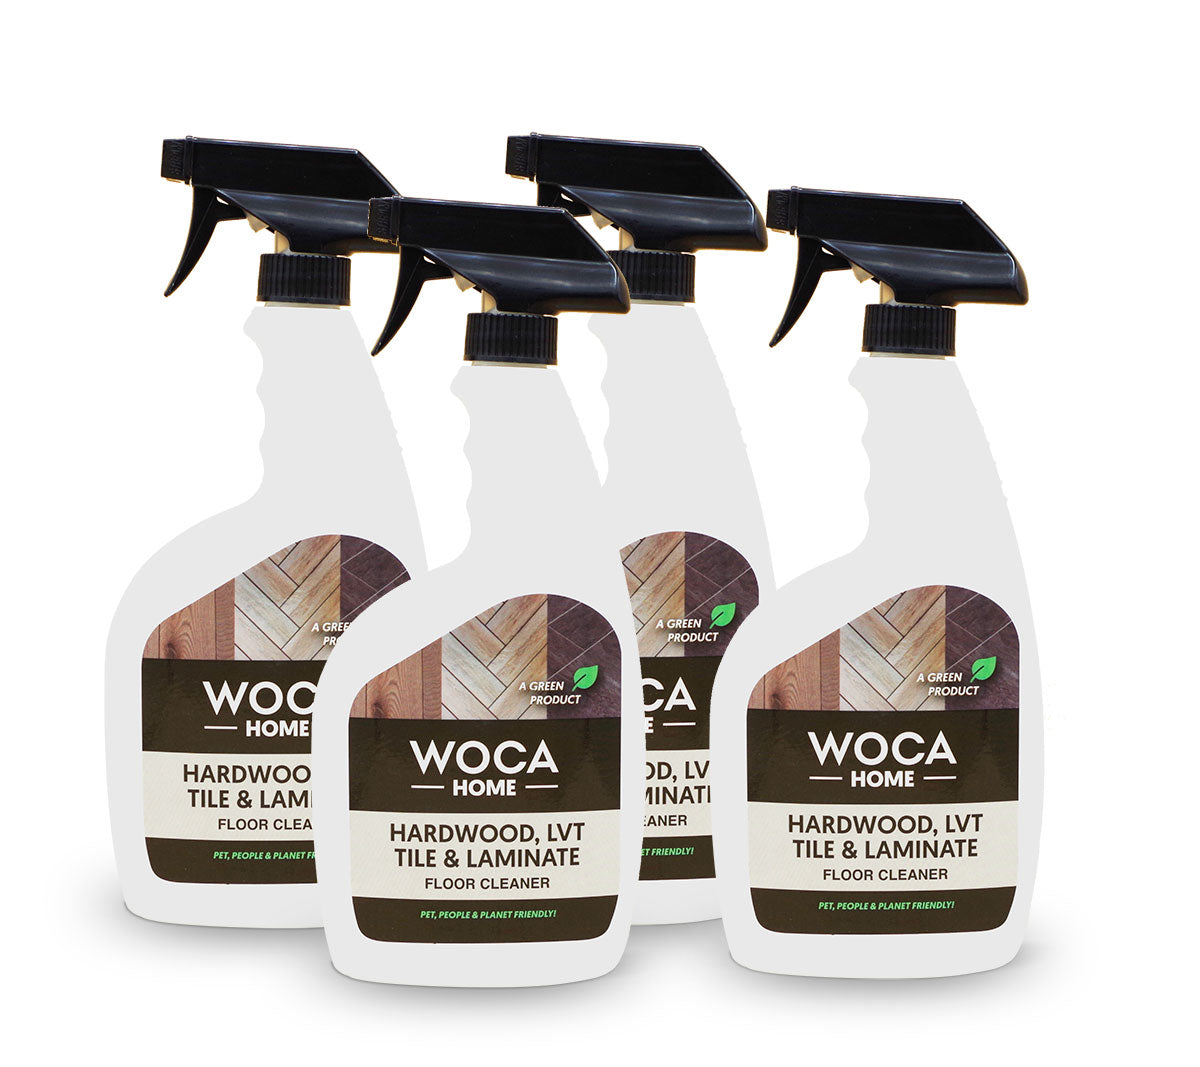 WOCA Home Hardwood, LVT, Tile & Laminate Floor Cleaner 4 Pack